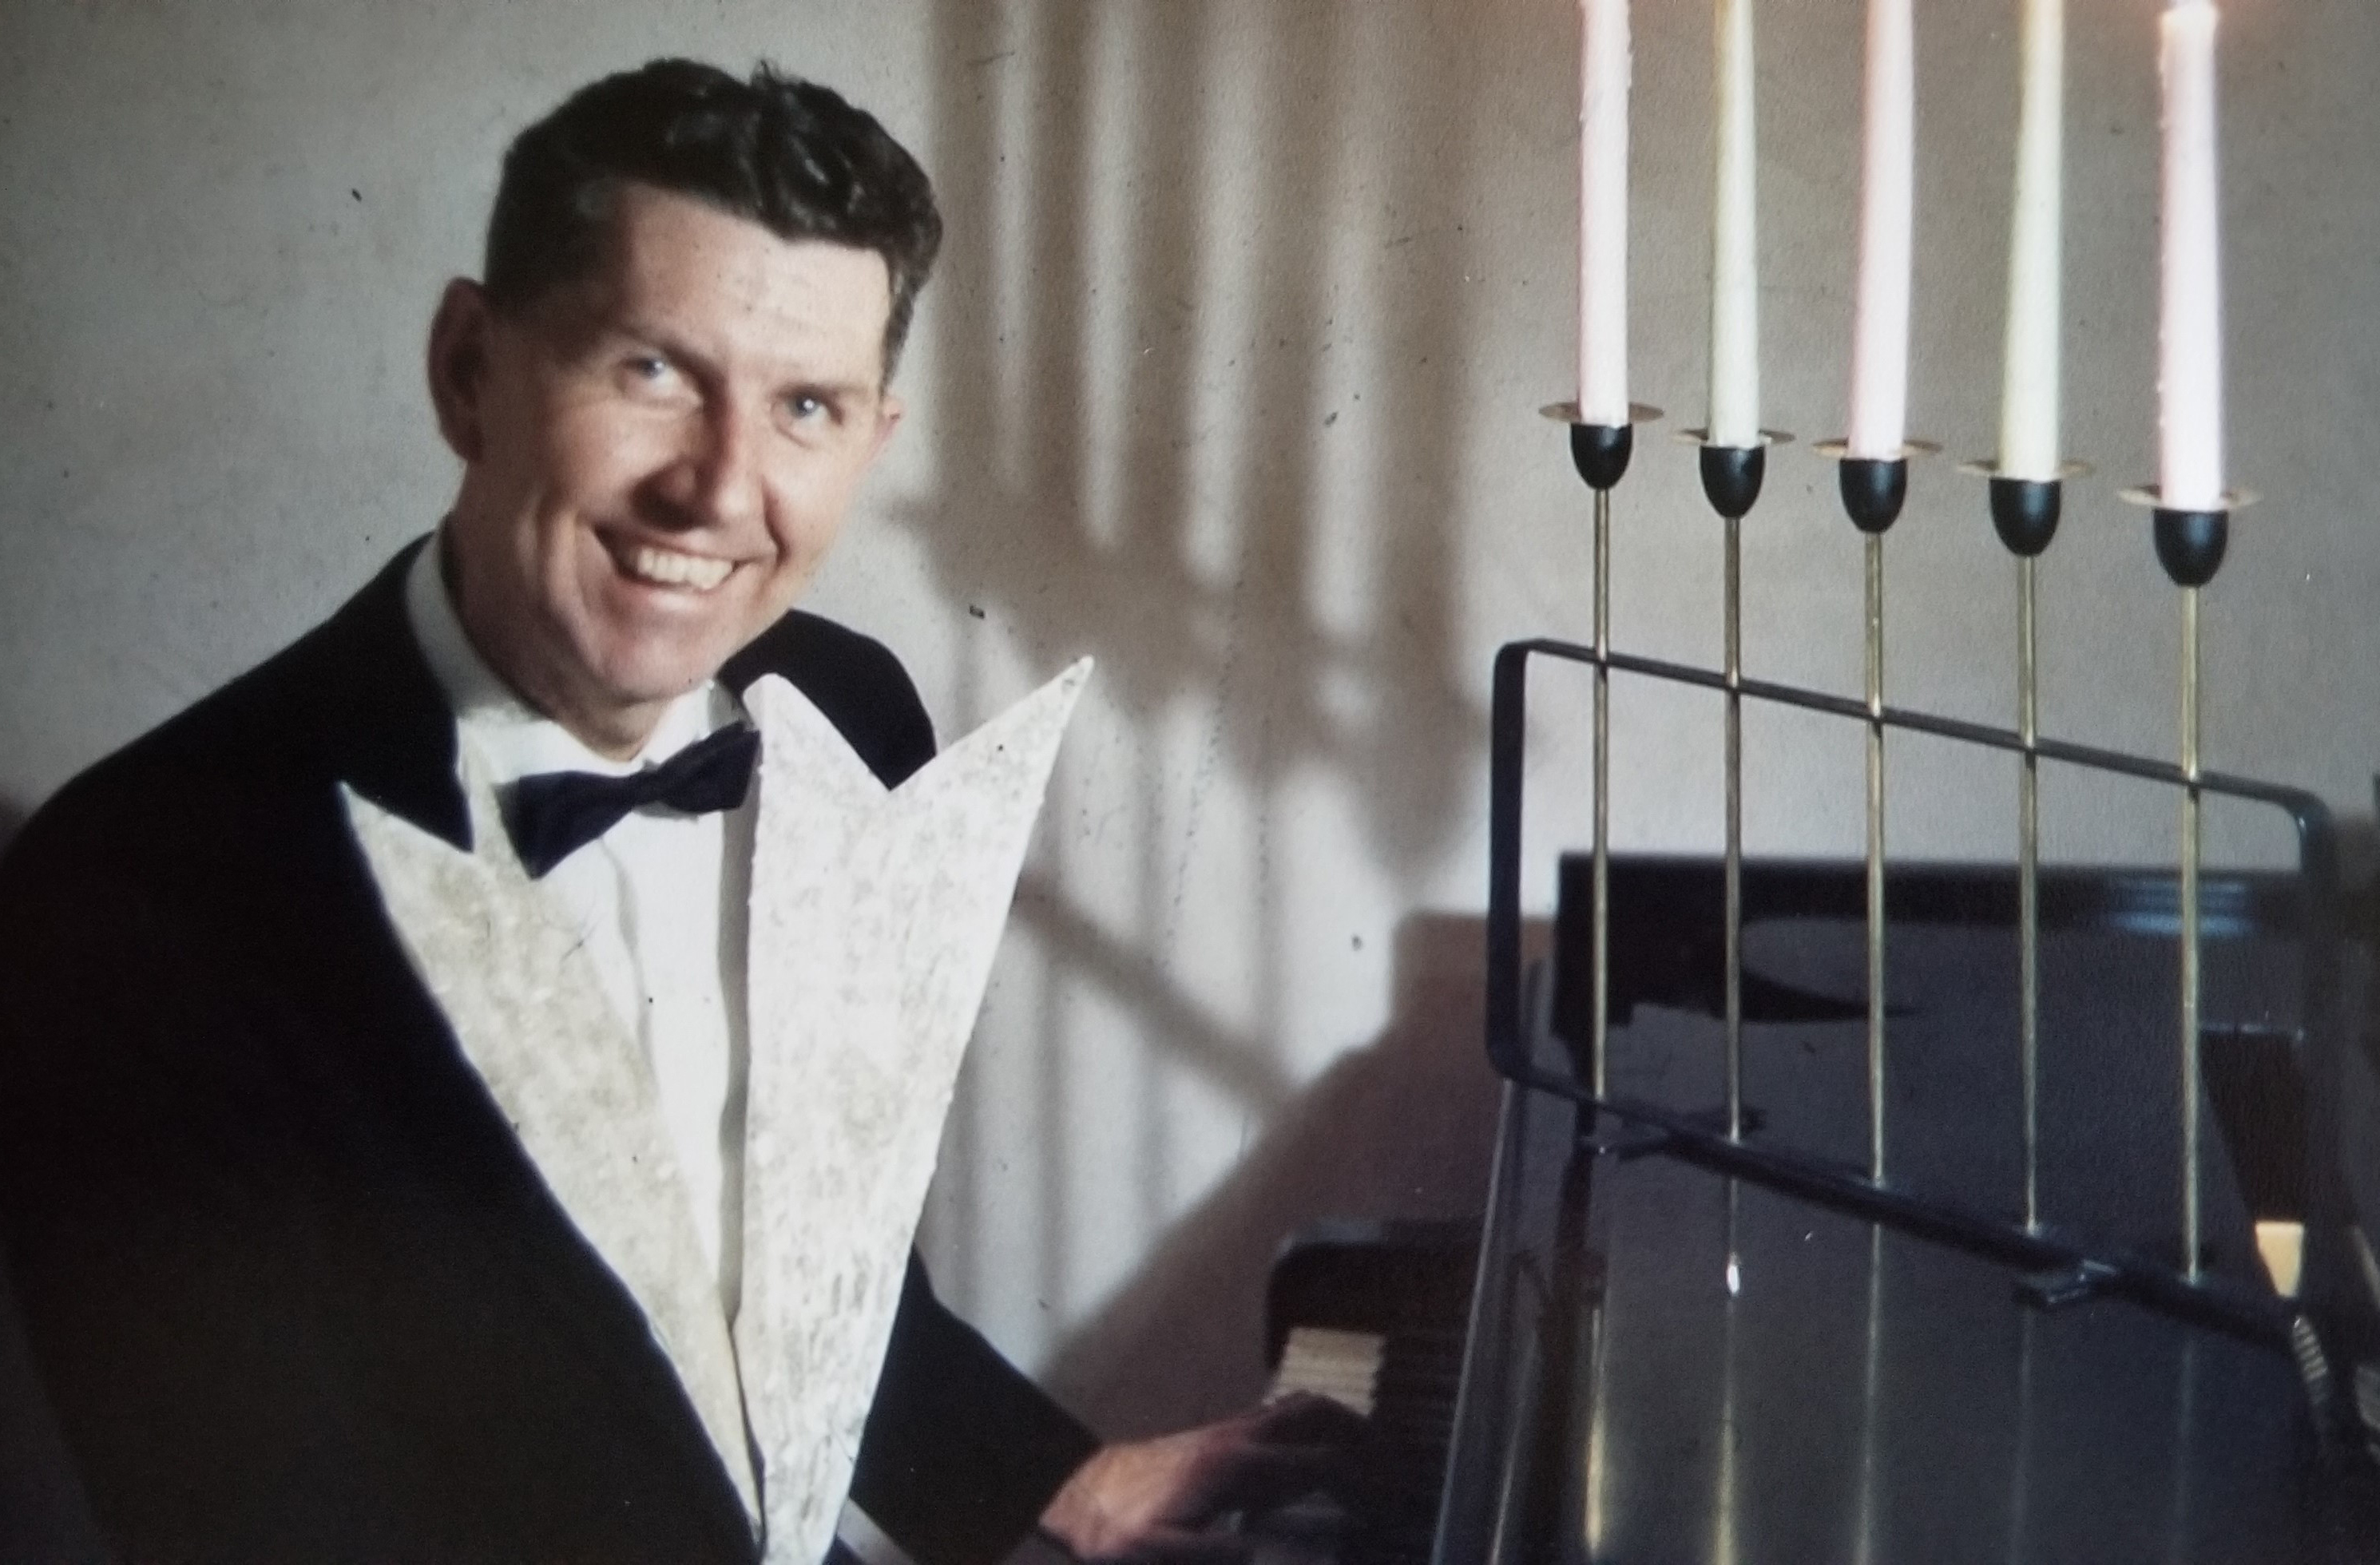 Robert Laxson sits at a piano while wearing a tuxedo.